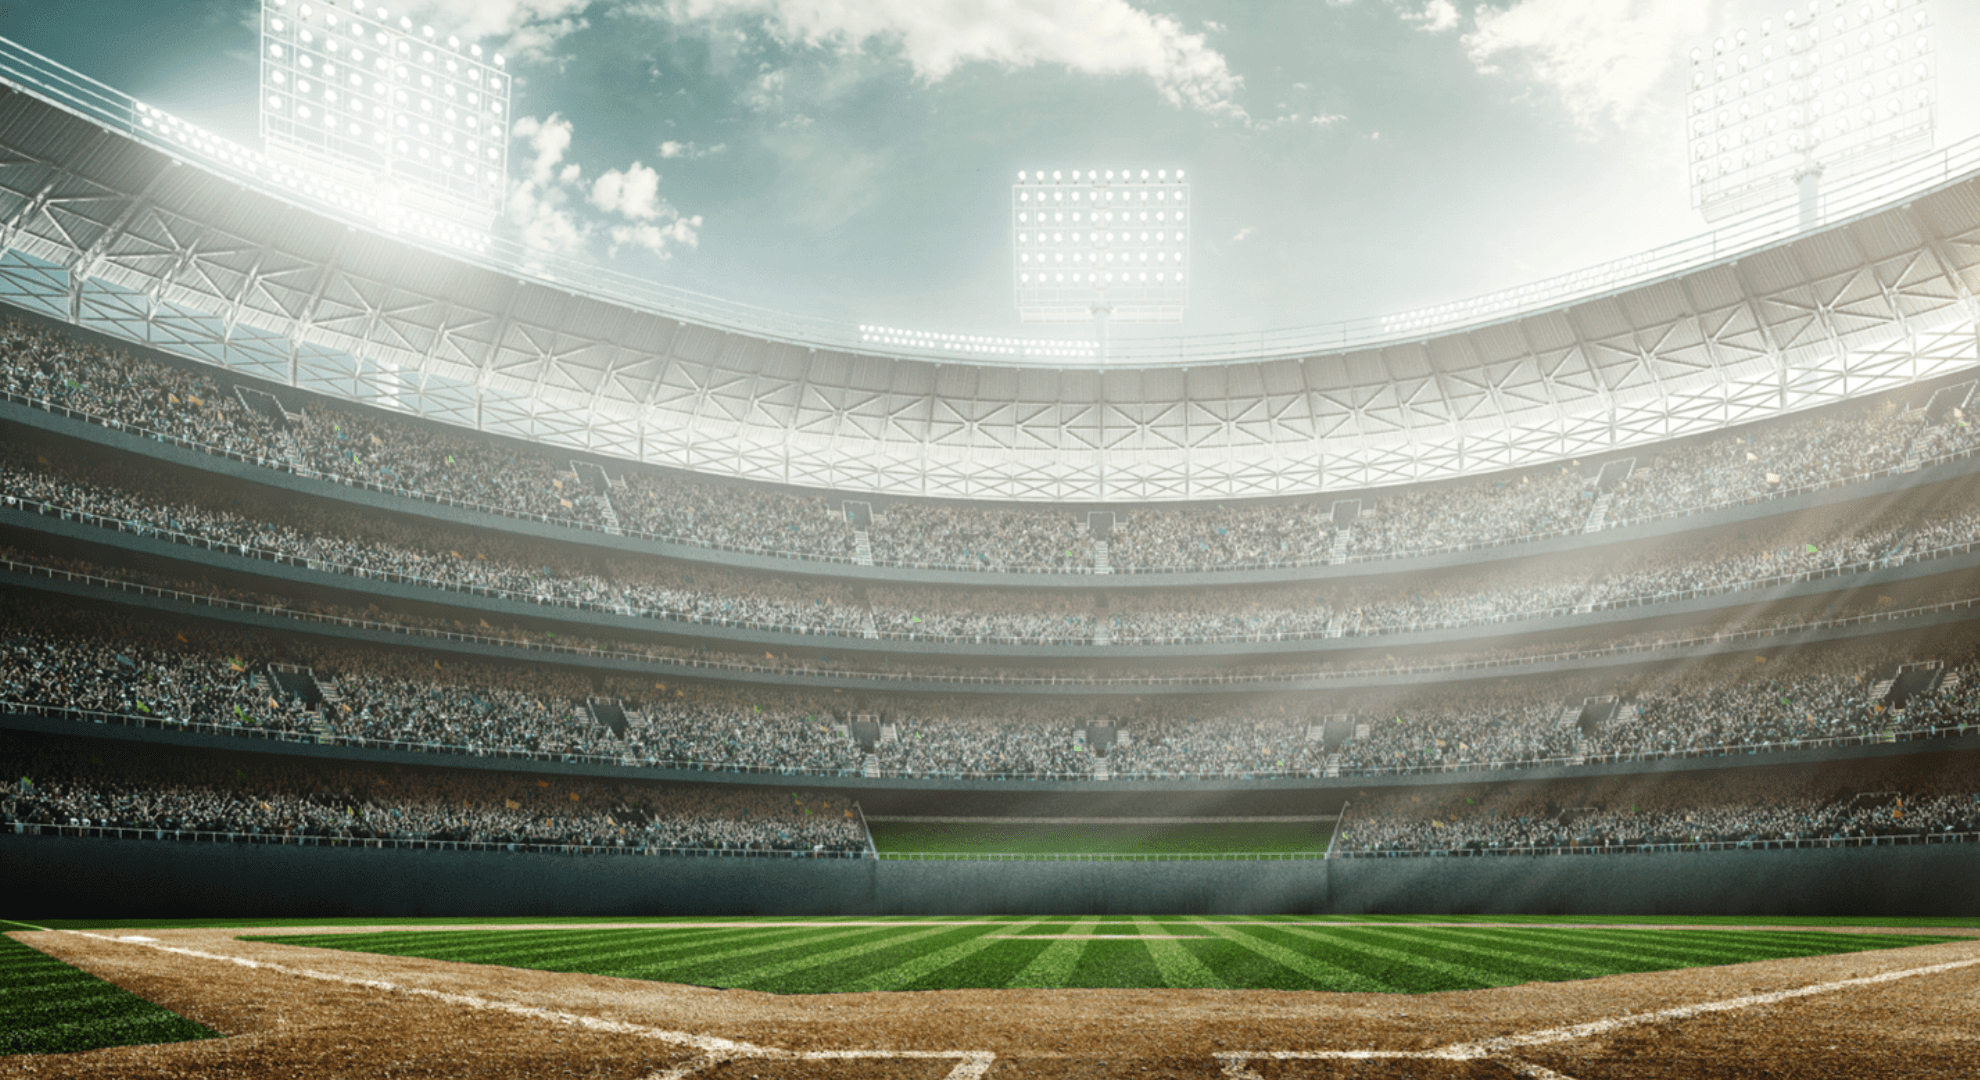 a baseball stadium